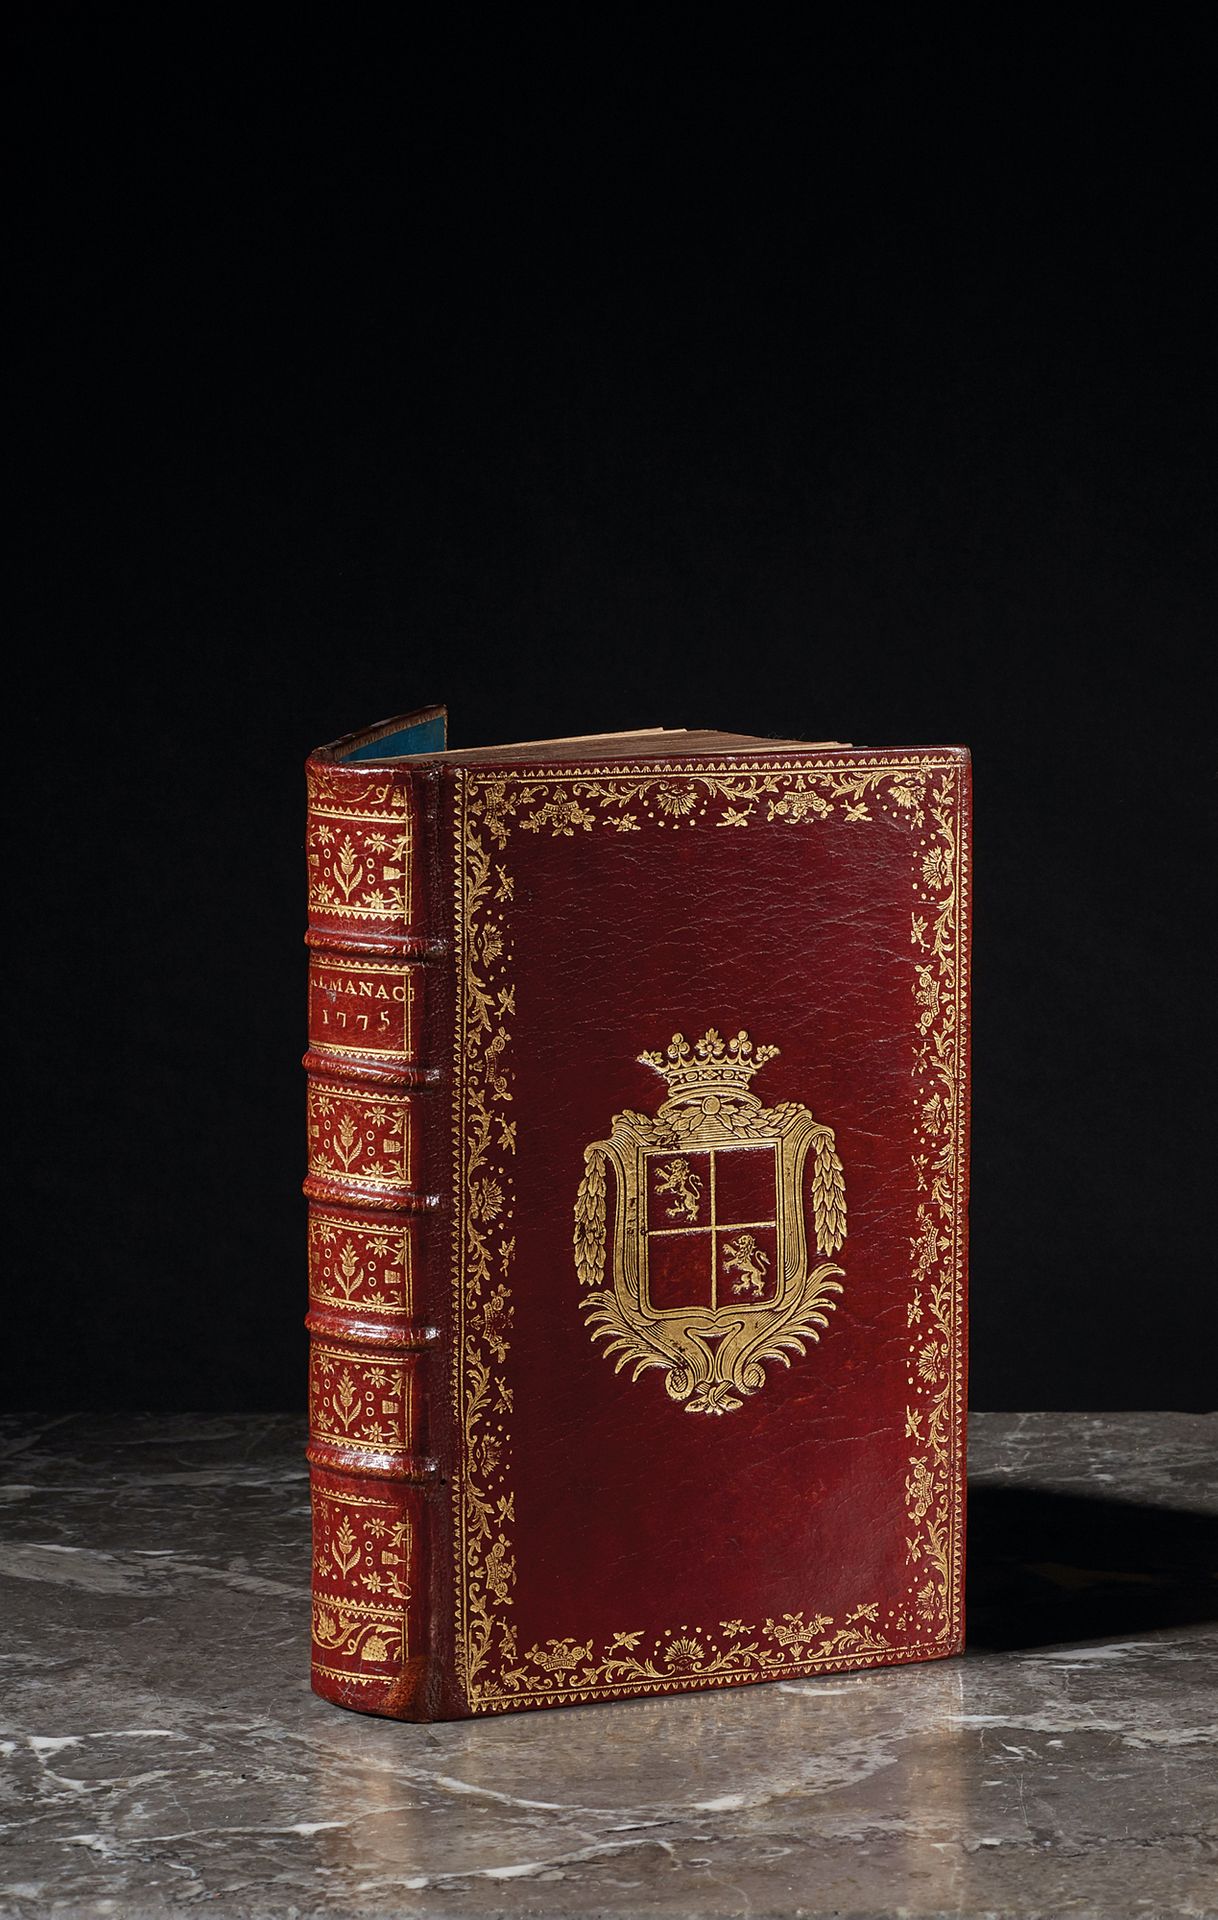 Null [ALMANACH]
Almanach royal pour l'an MDCCLXXV. Paris, chez Le breton rue Hau&hellip;